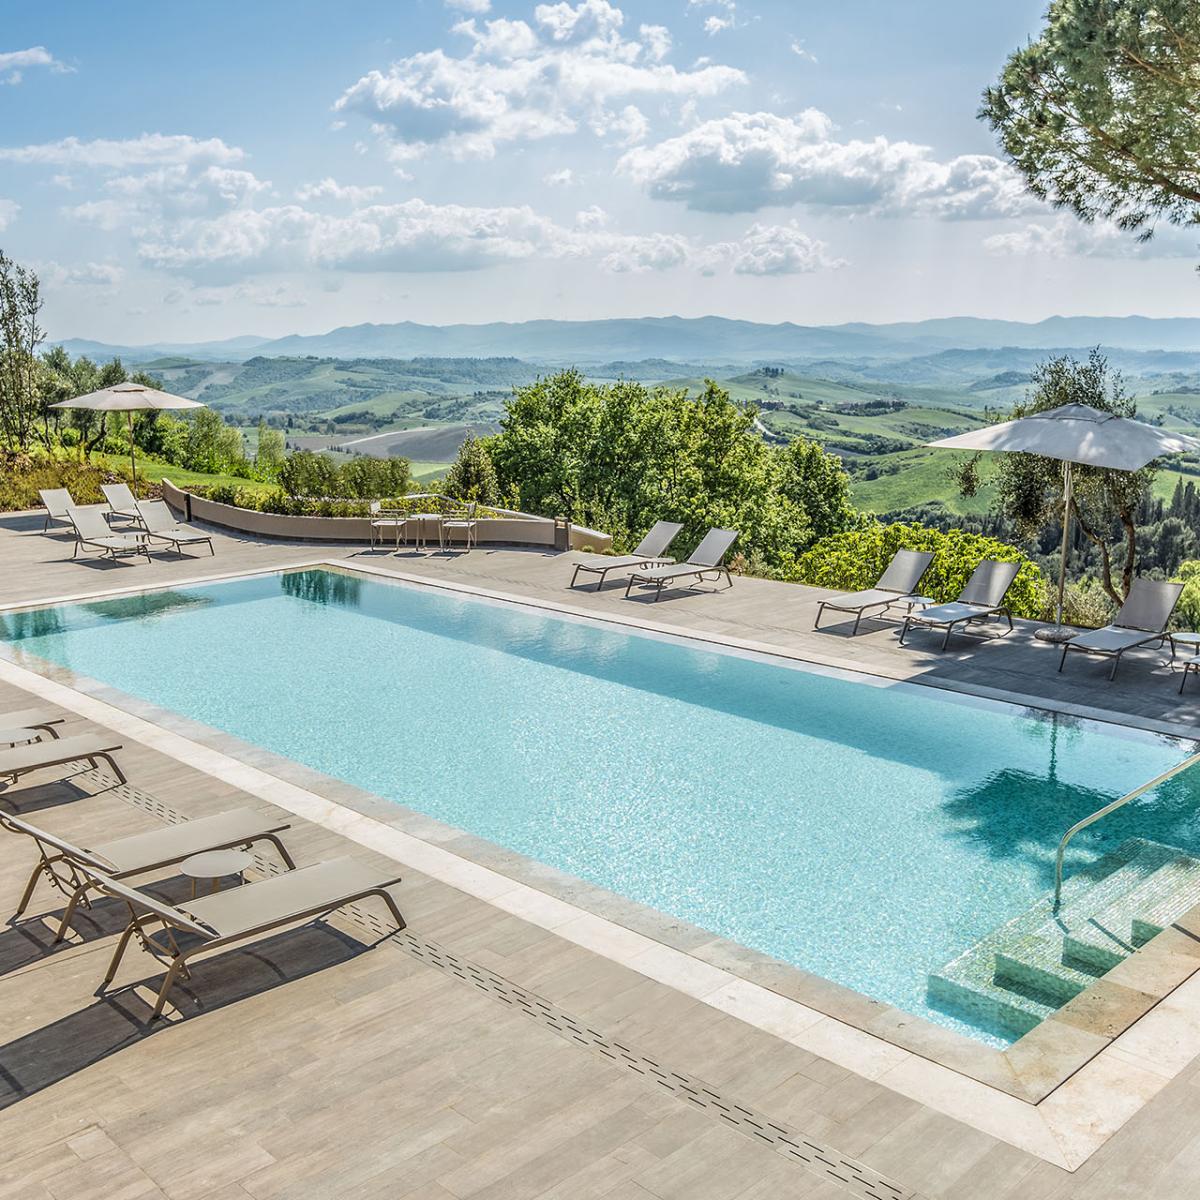 Toscana Resort Castelfalfi Leisure Sales Case Study